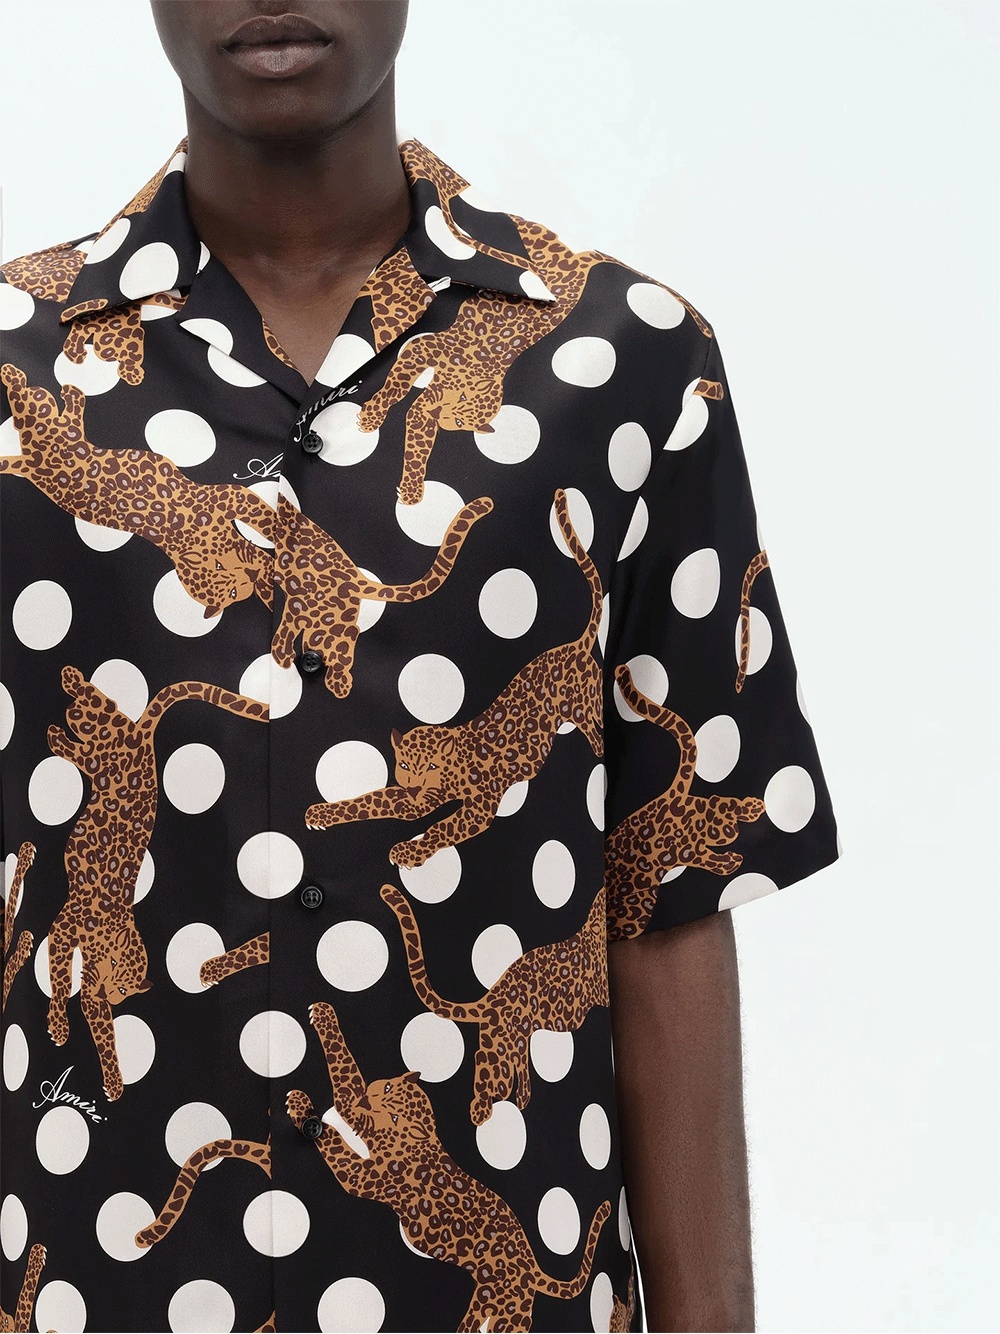 Leopard Polka Dots Bowling Shirt - 6